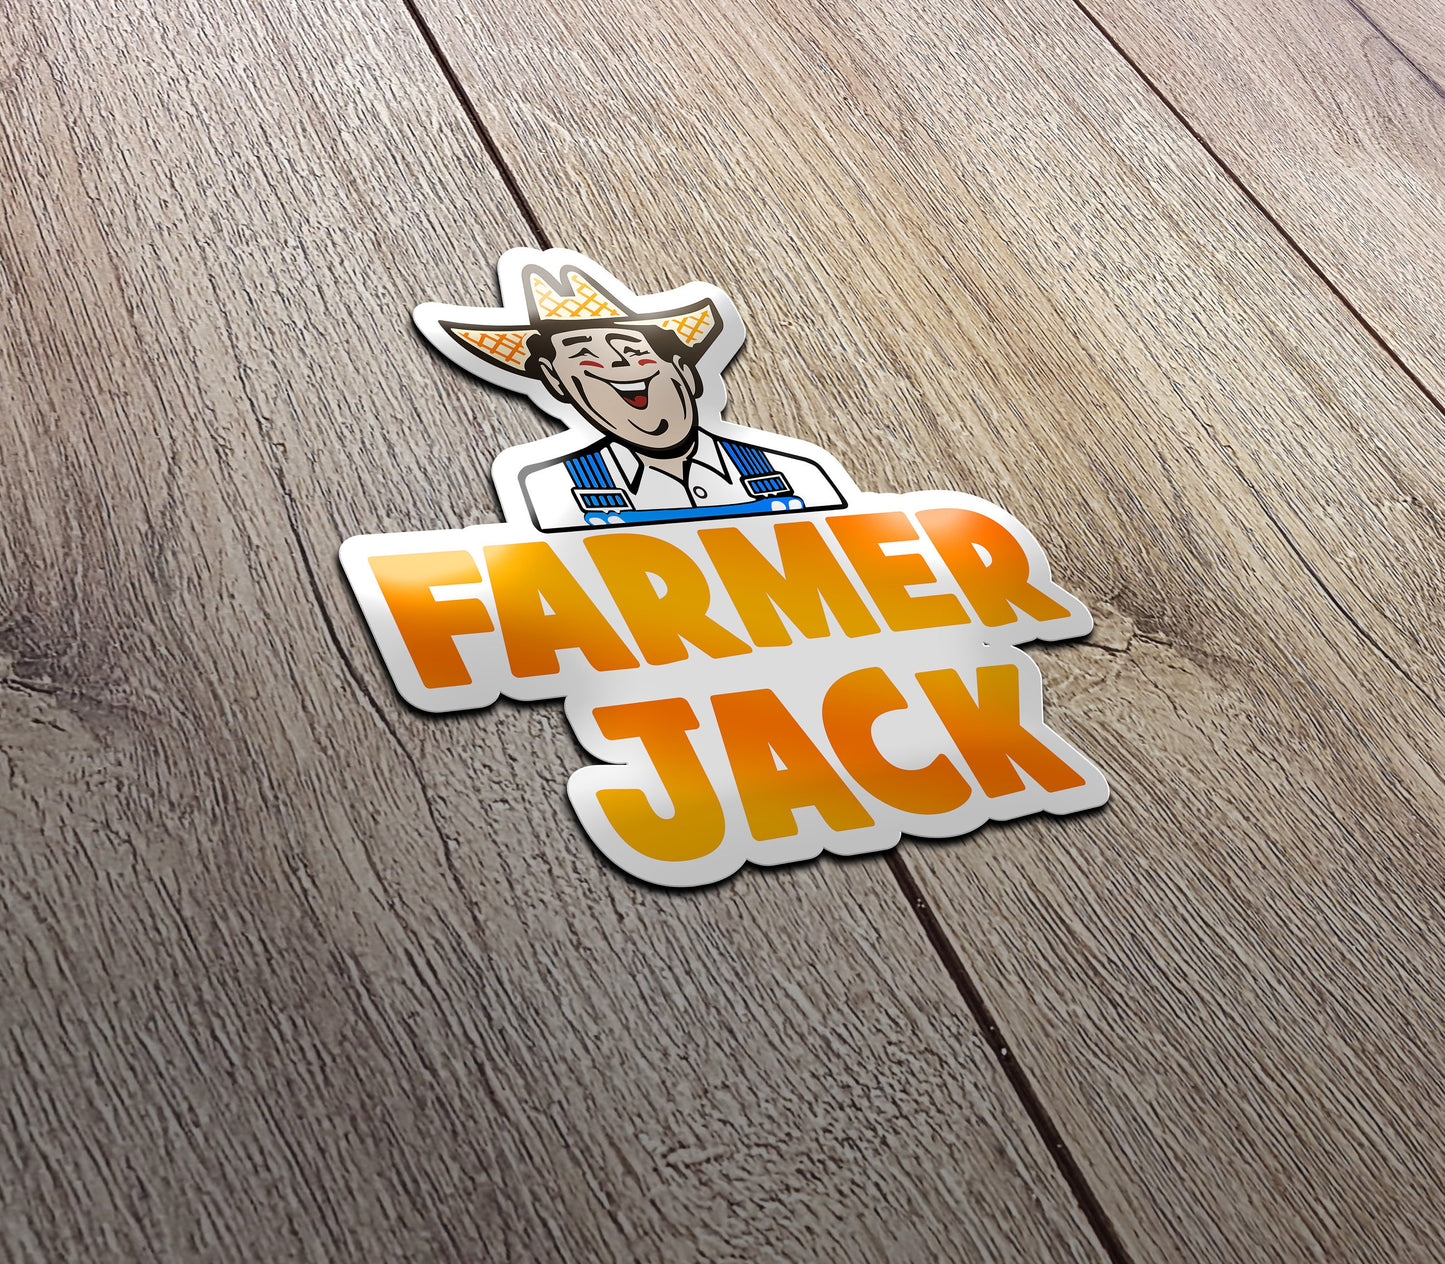 Farmer Jack Sticker